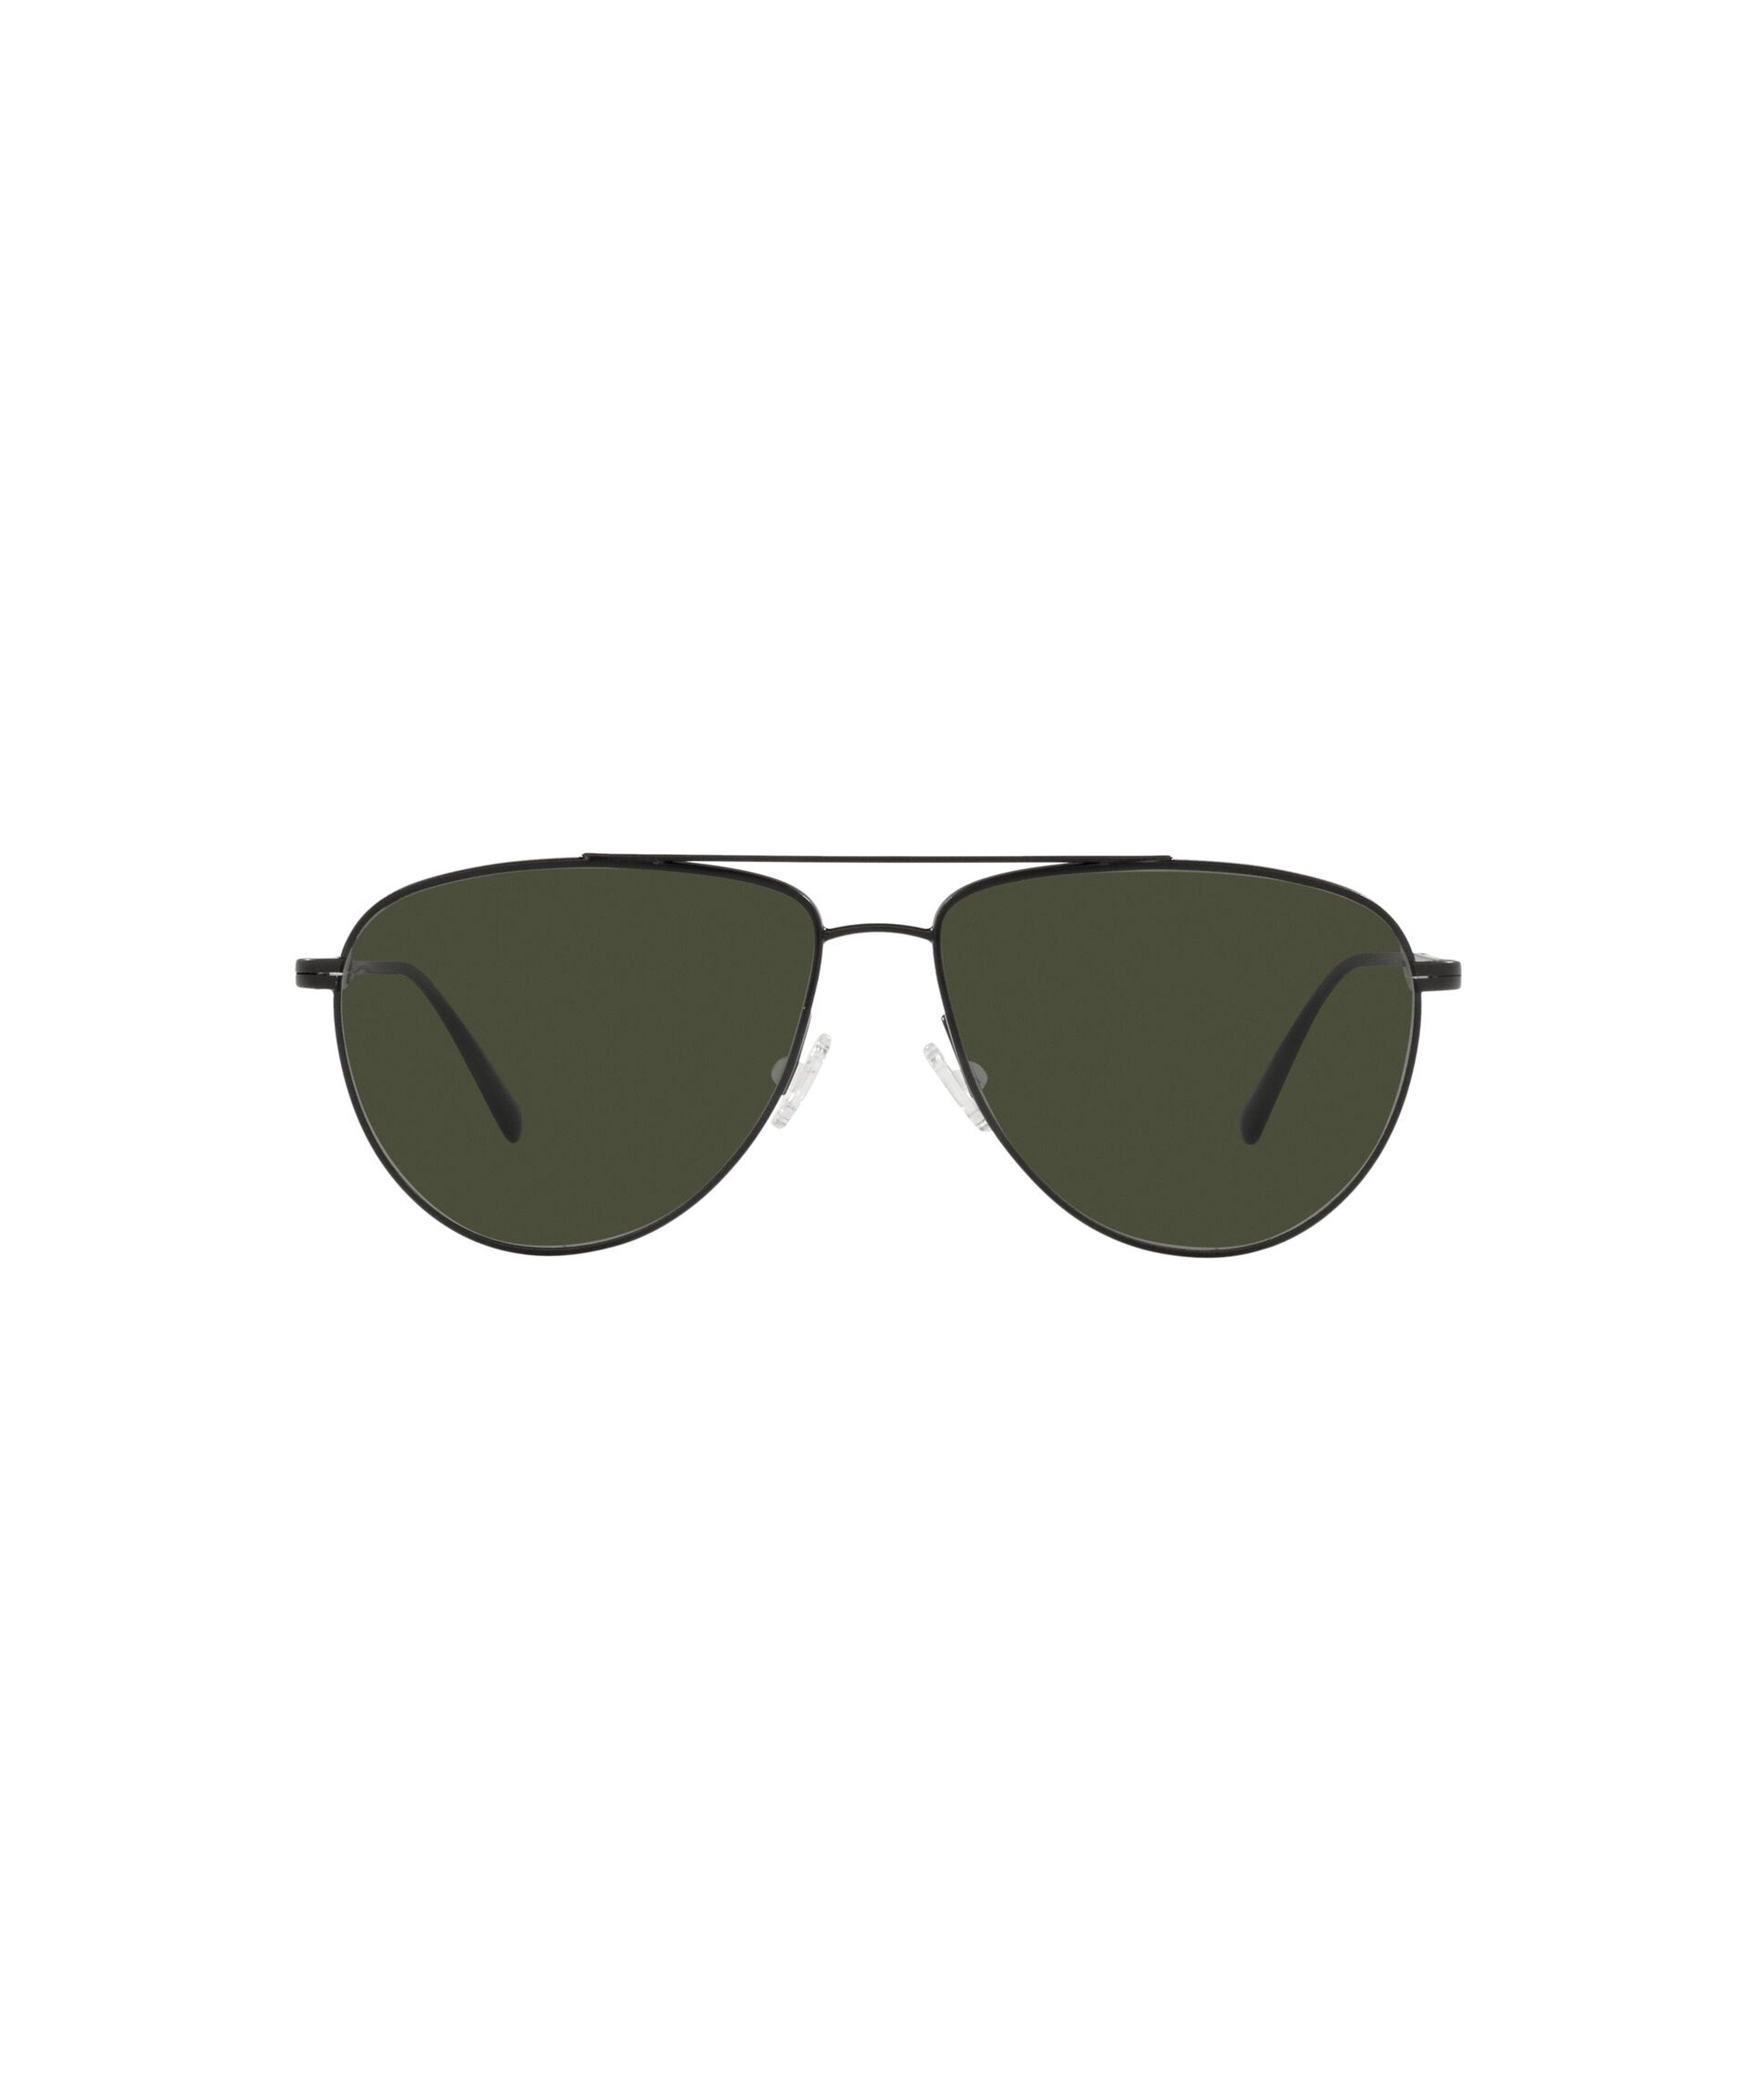 Disoriano Sunglasses image 0